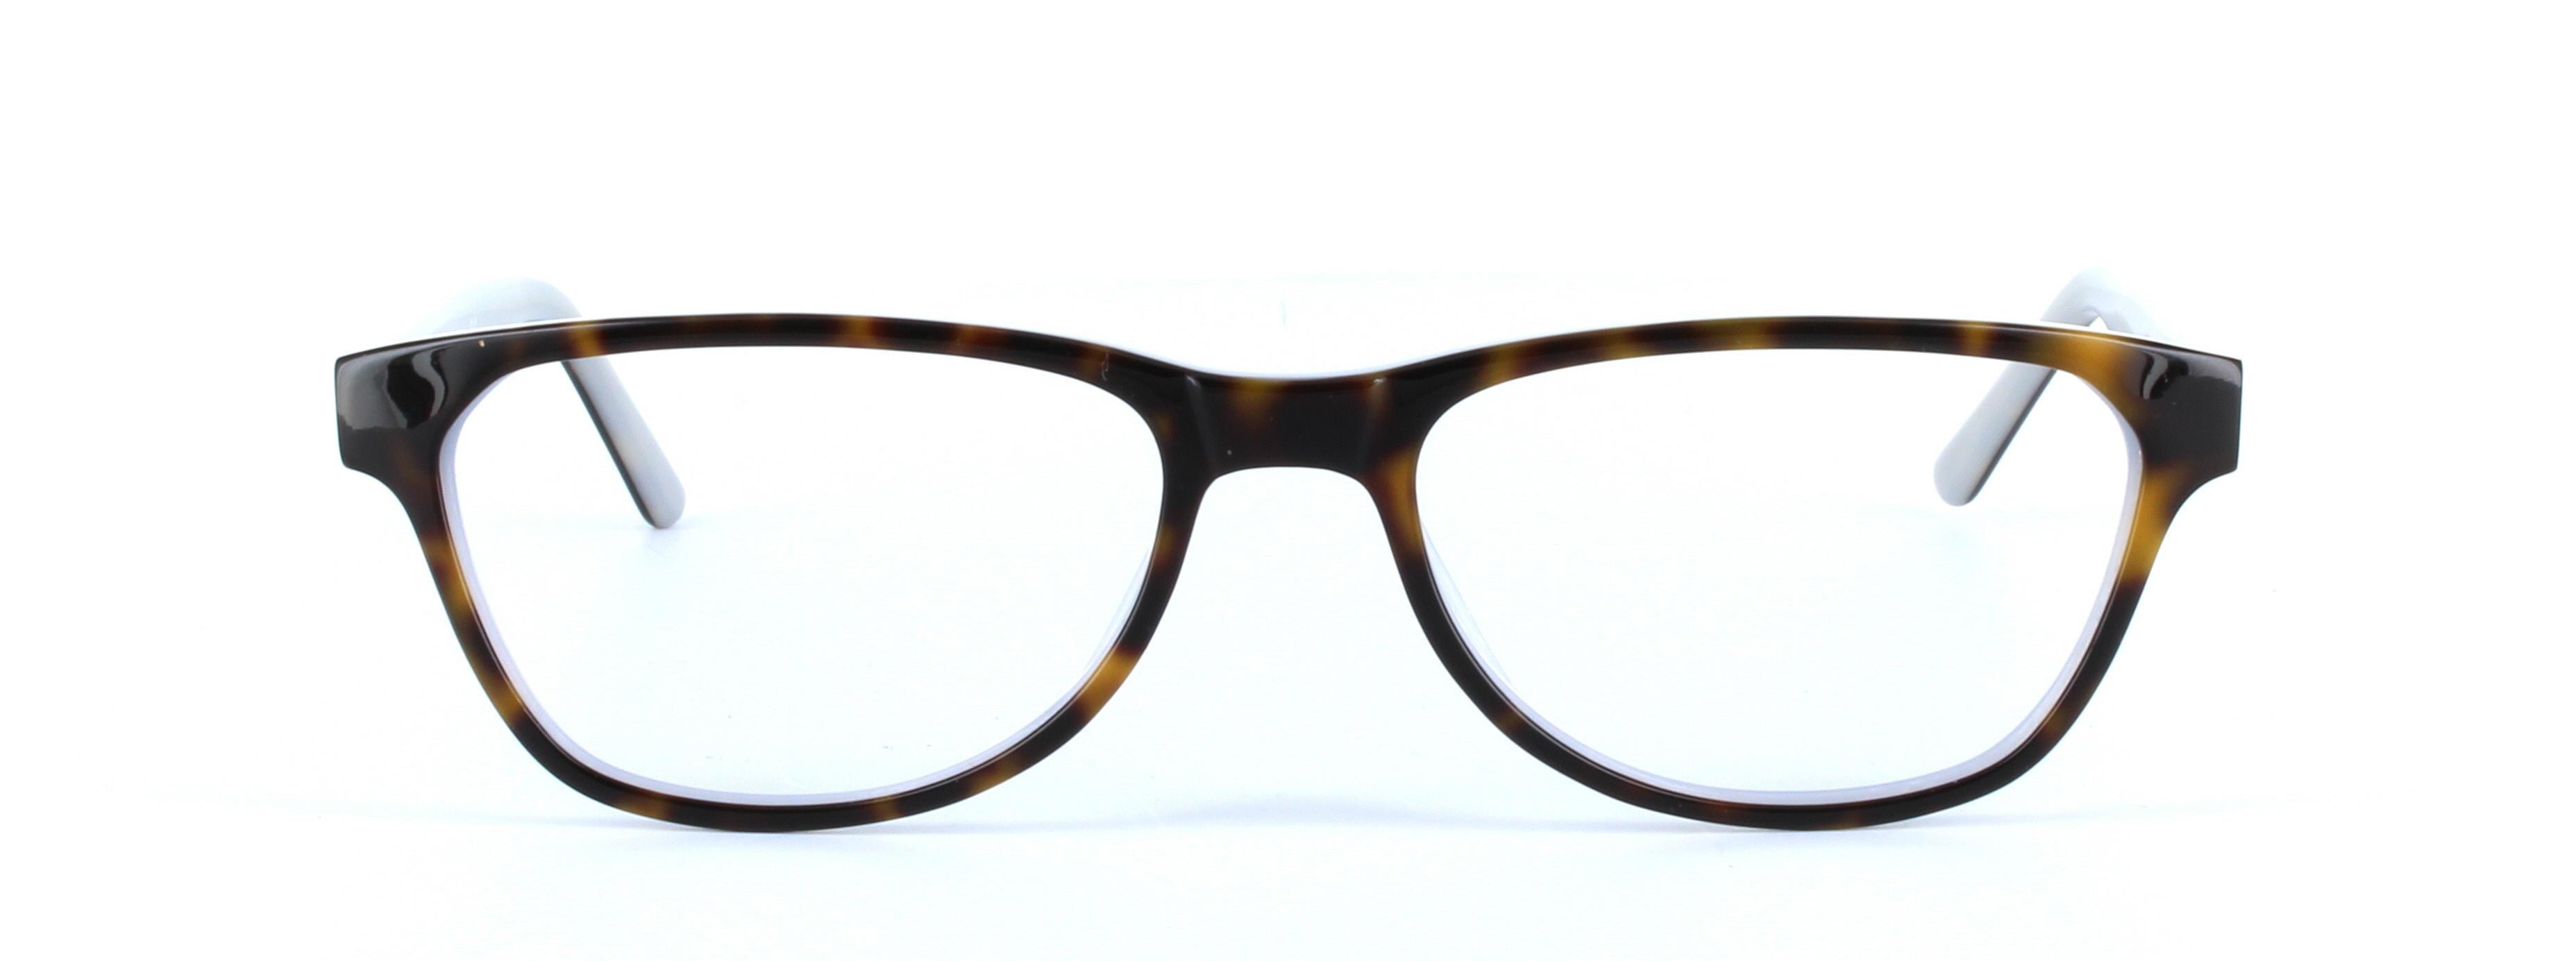 Brown Full Rim Oval Plastic Glasses Whispa - Image View 5